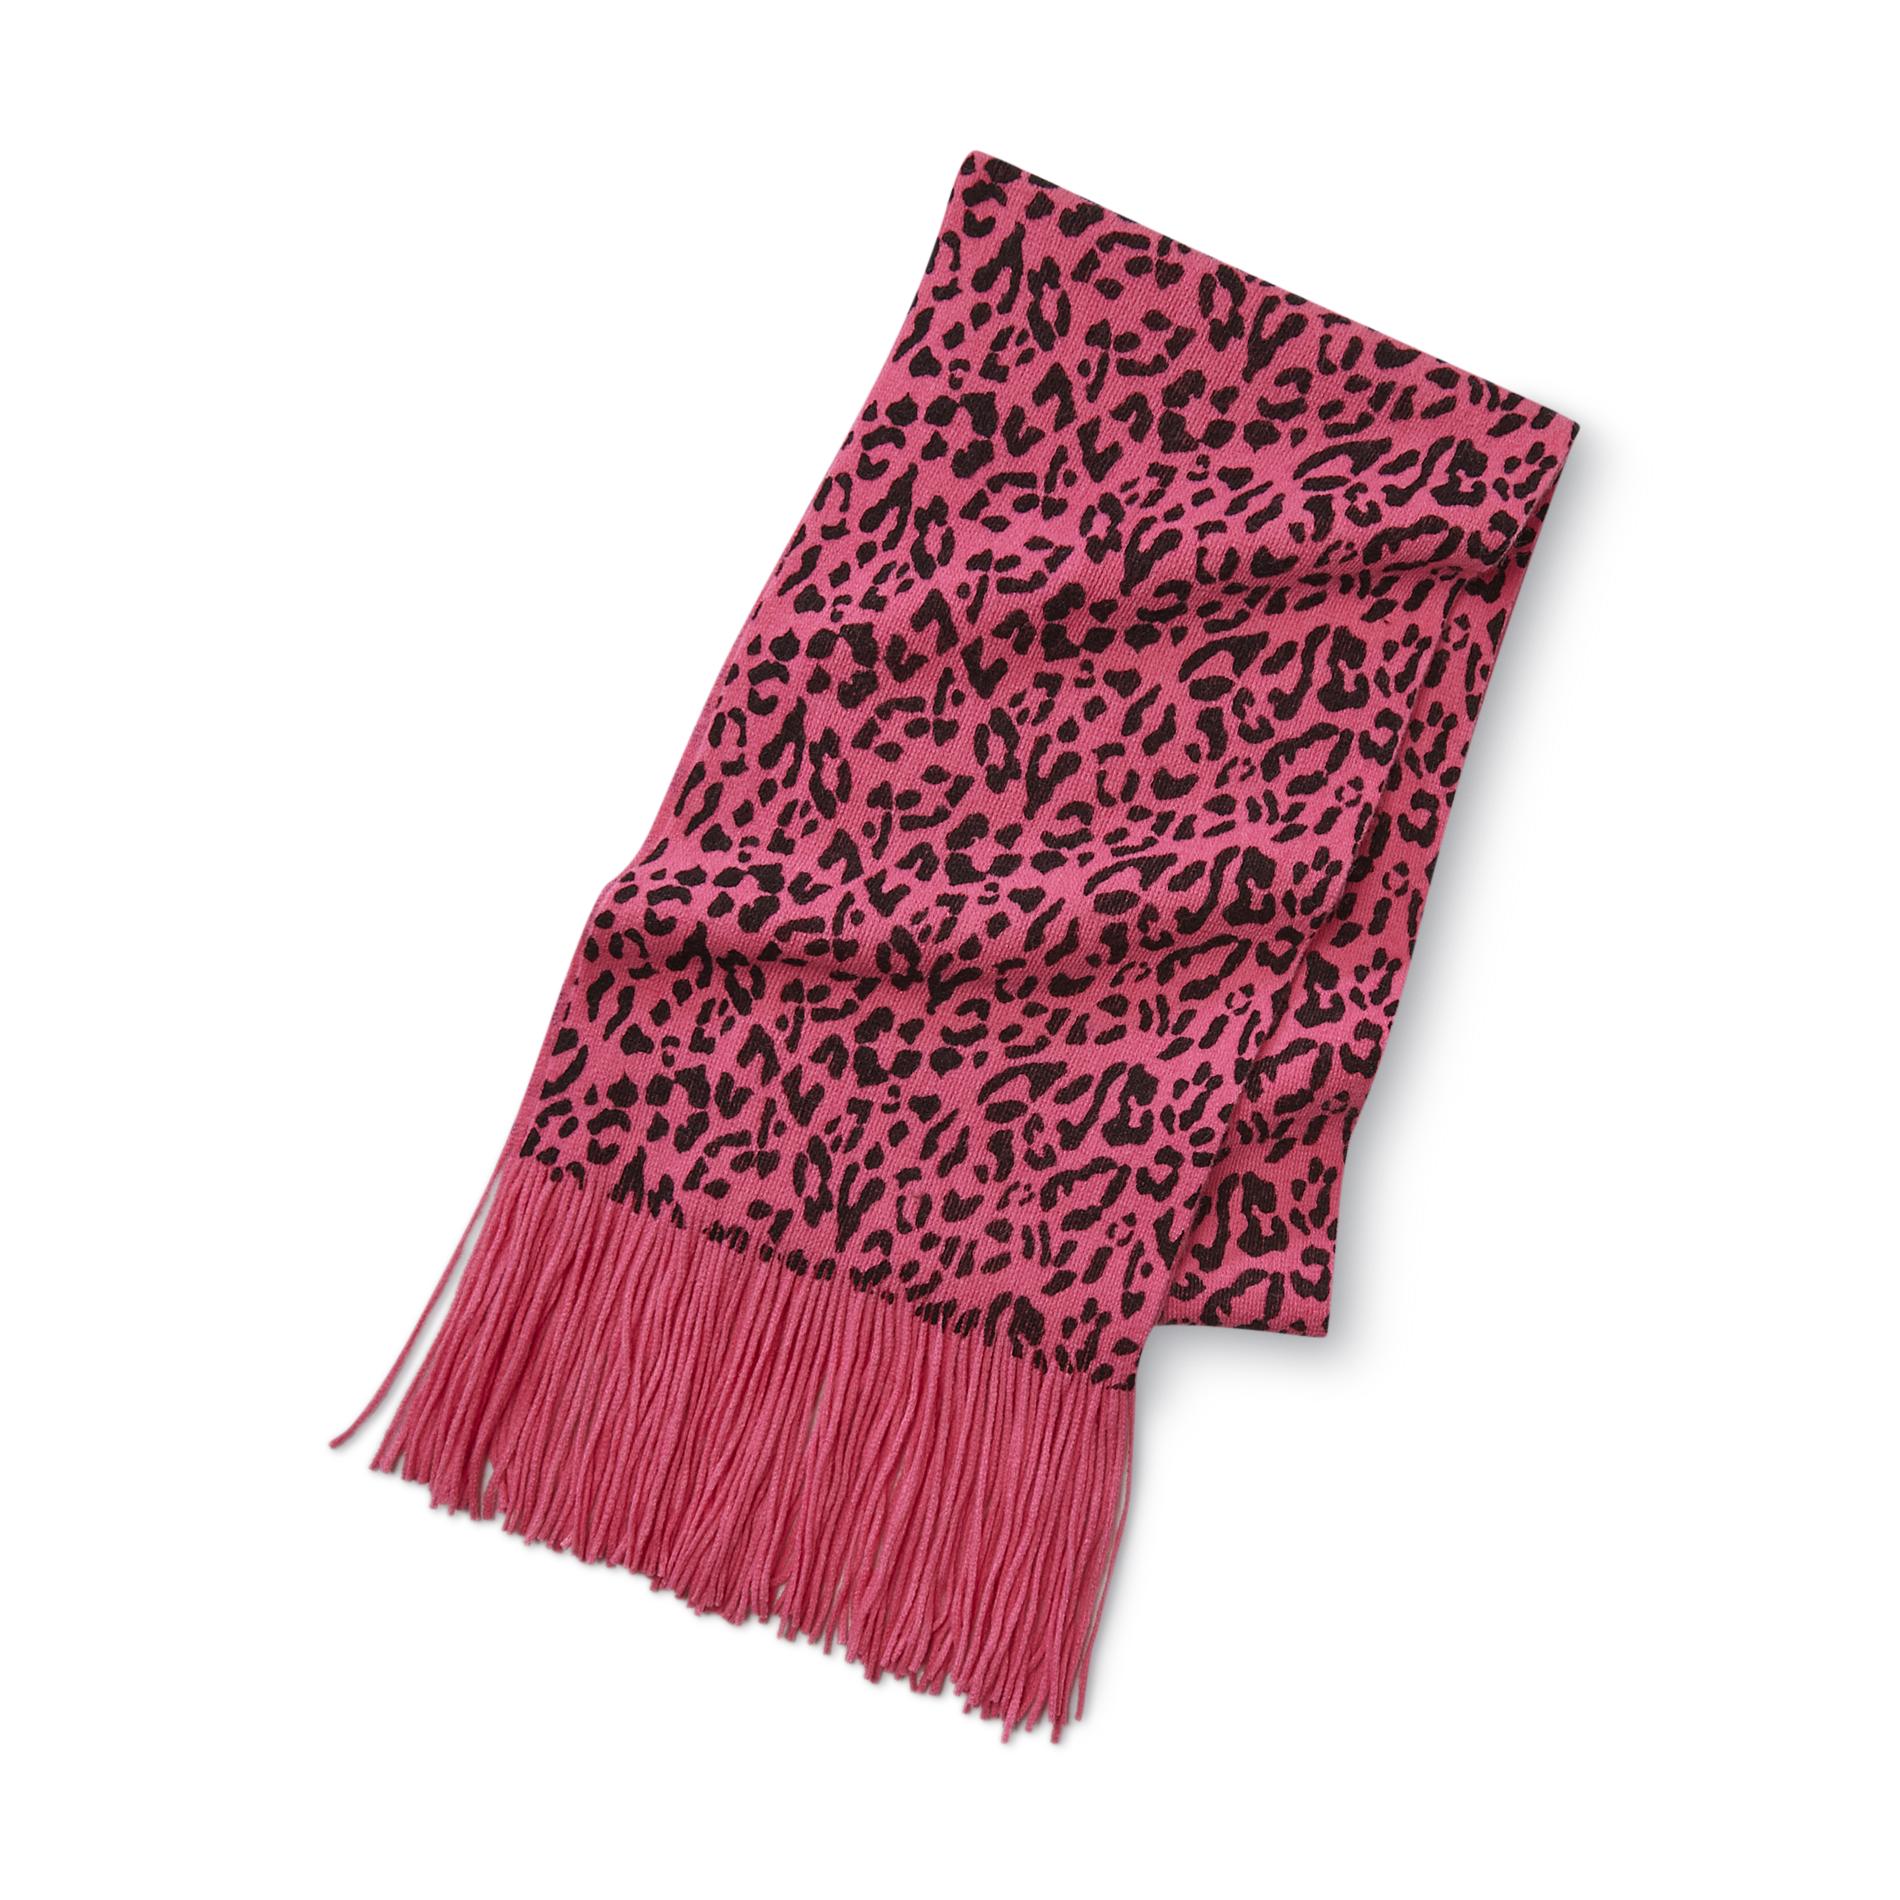 Joe Boxer Women's Knit Scarf - Leopard Print